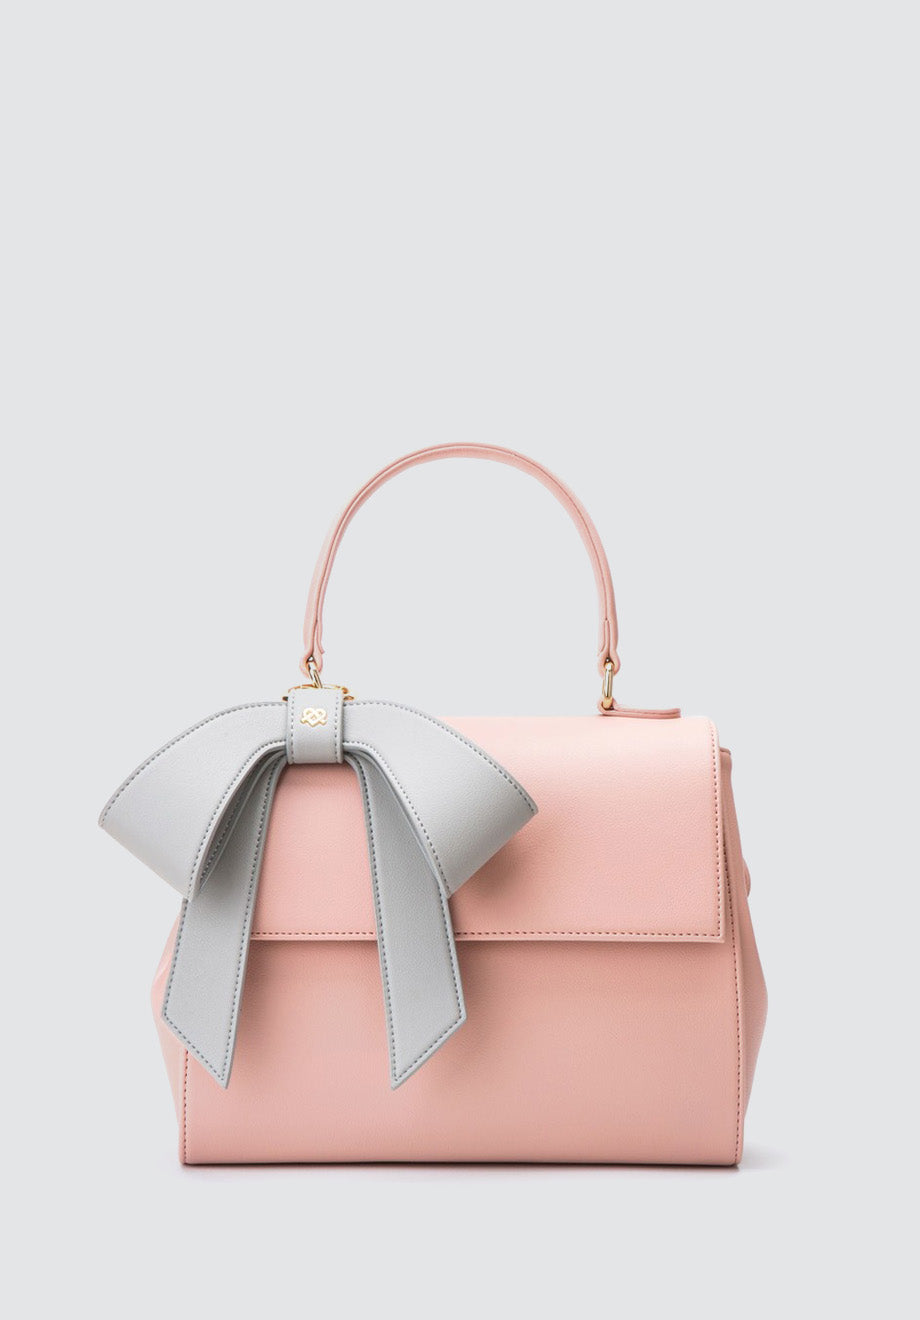 Cottontail | Light Pink Vegan Leather Bag